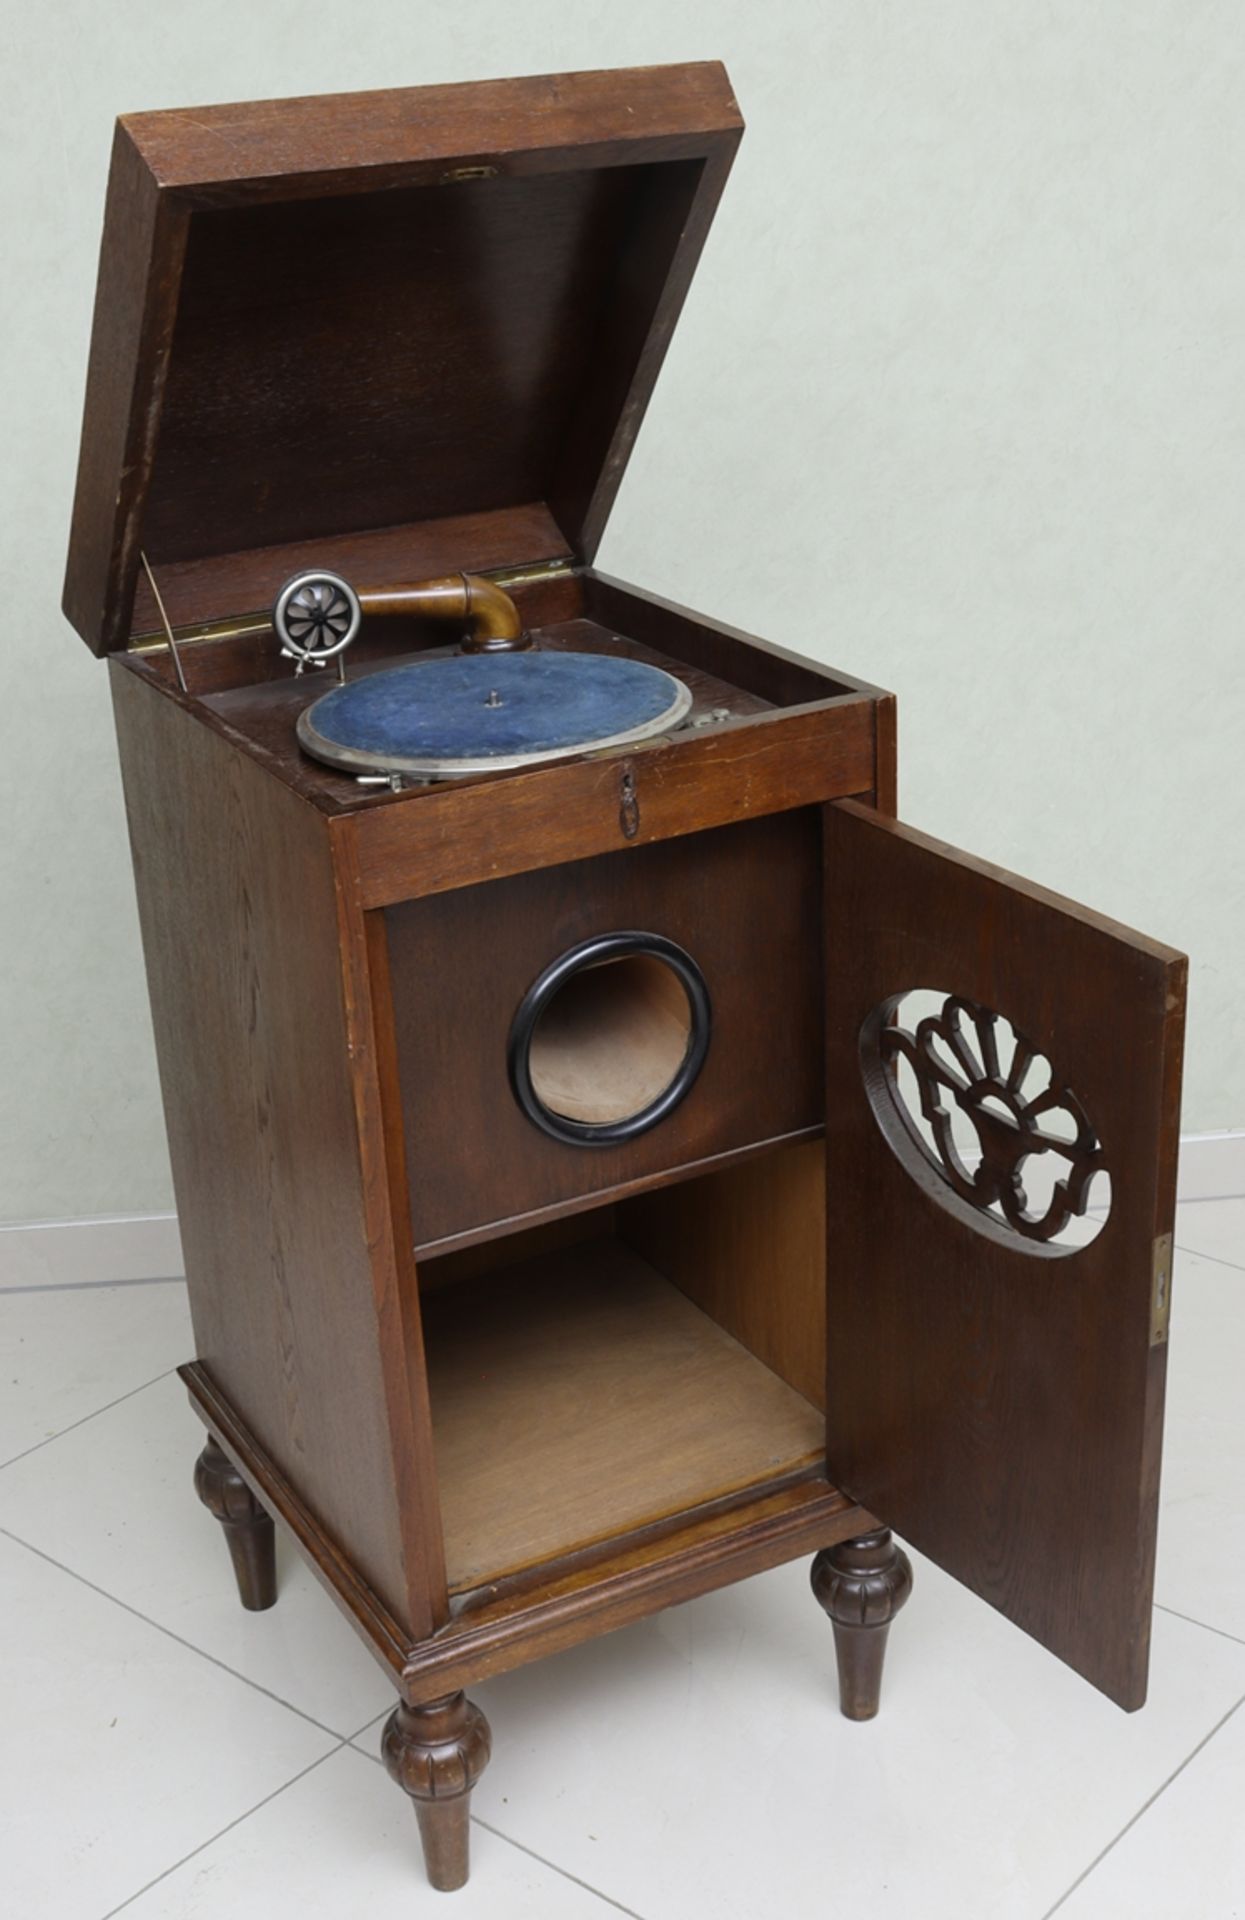 Stand gramophone, oak wood 1920s, German - Image 2 of 4